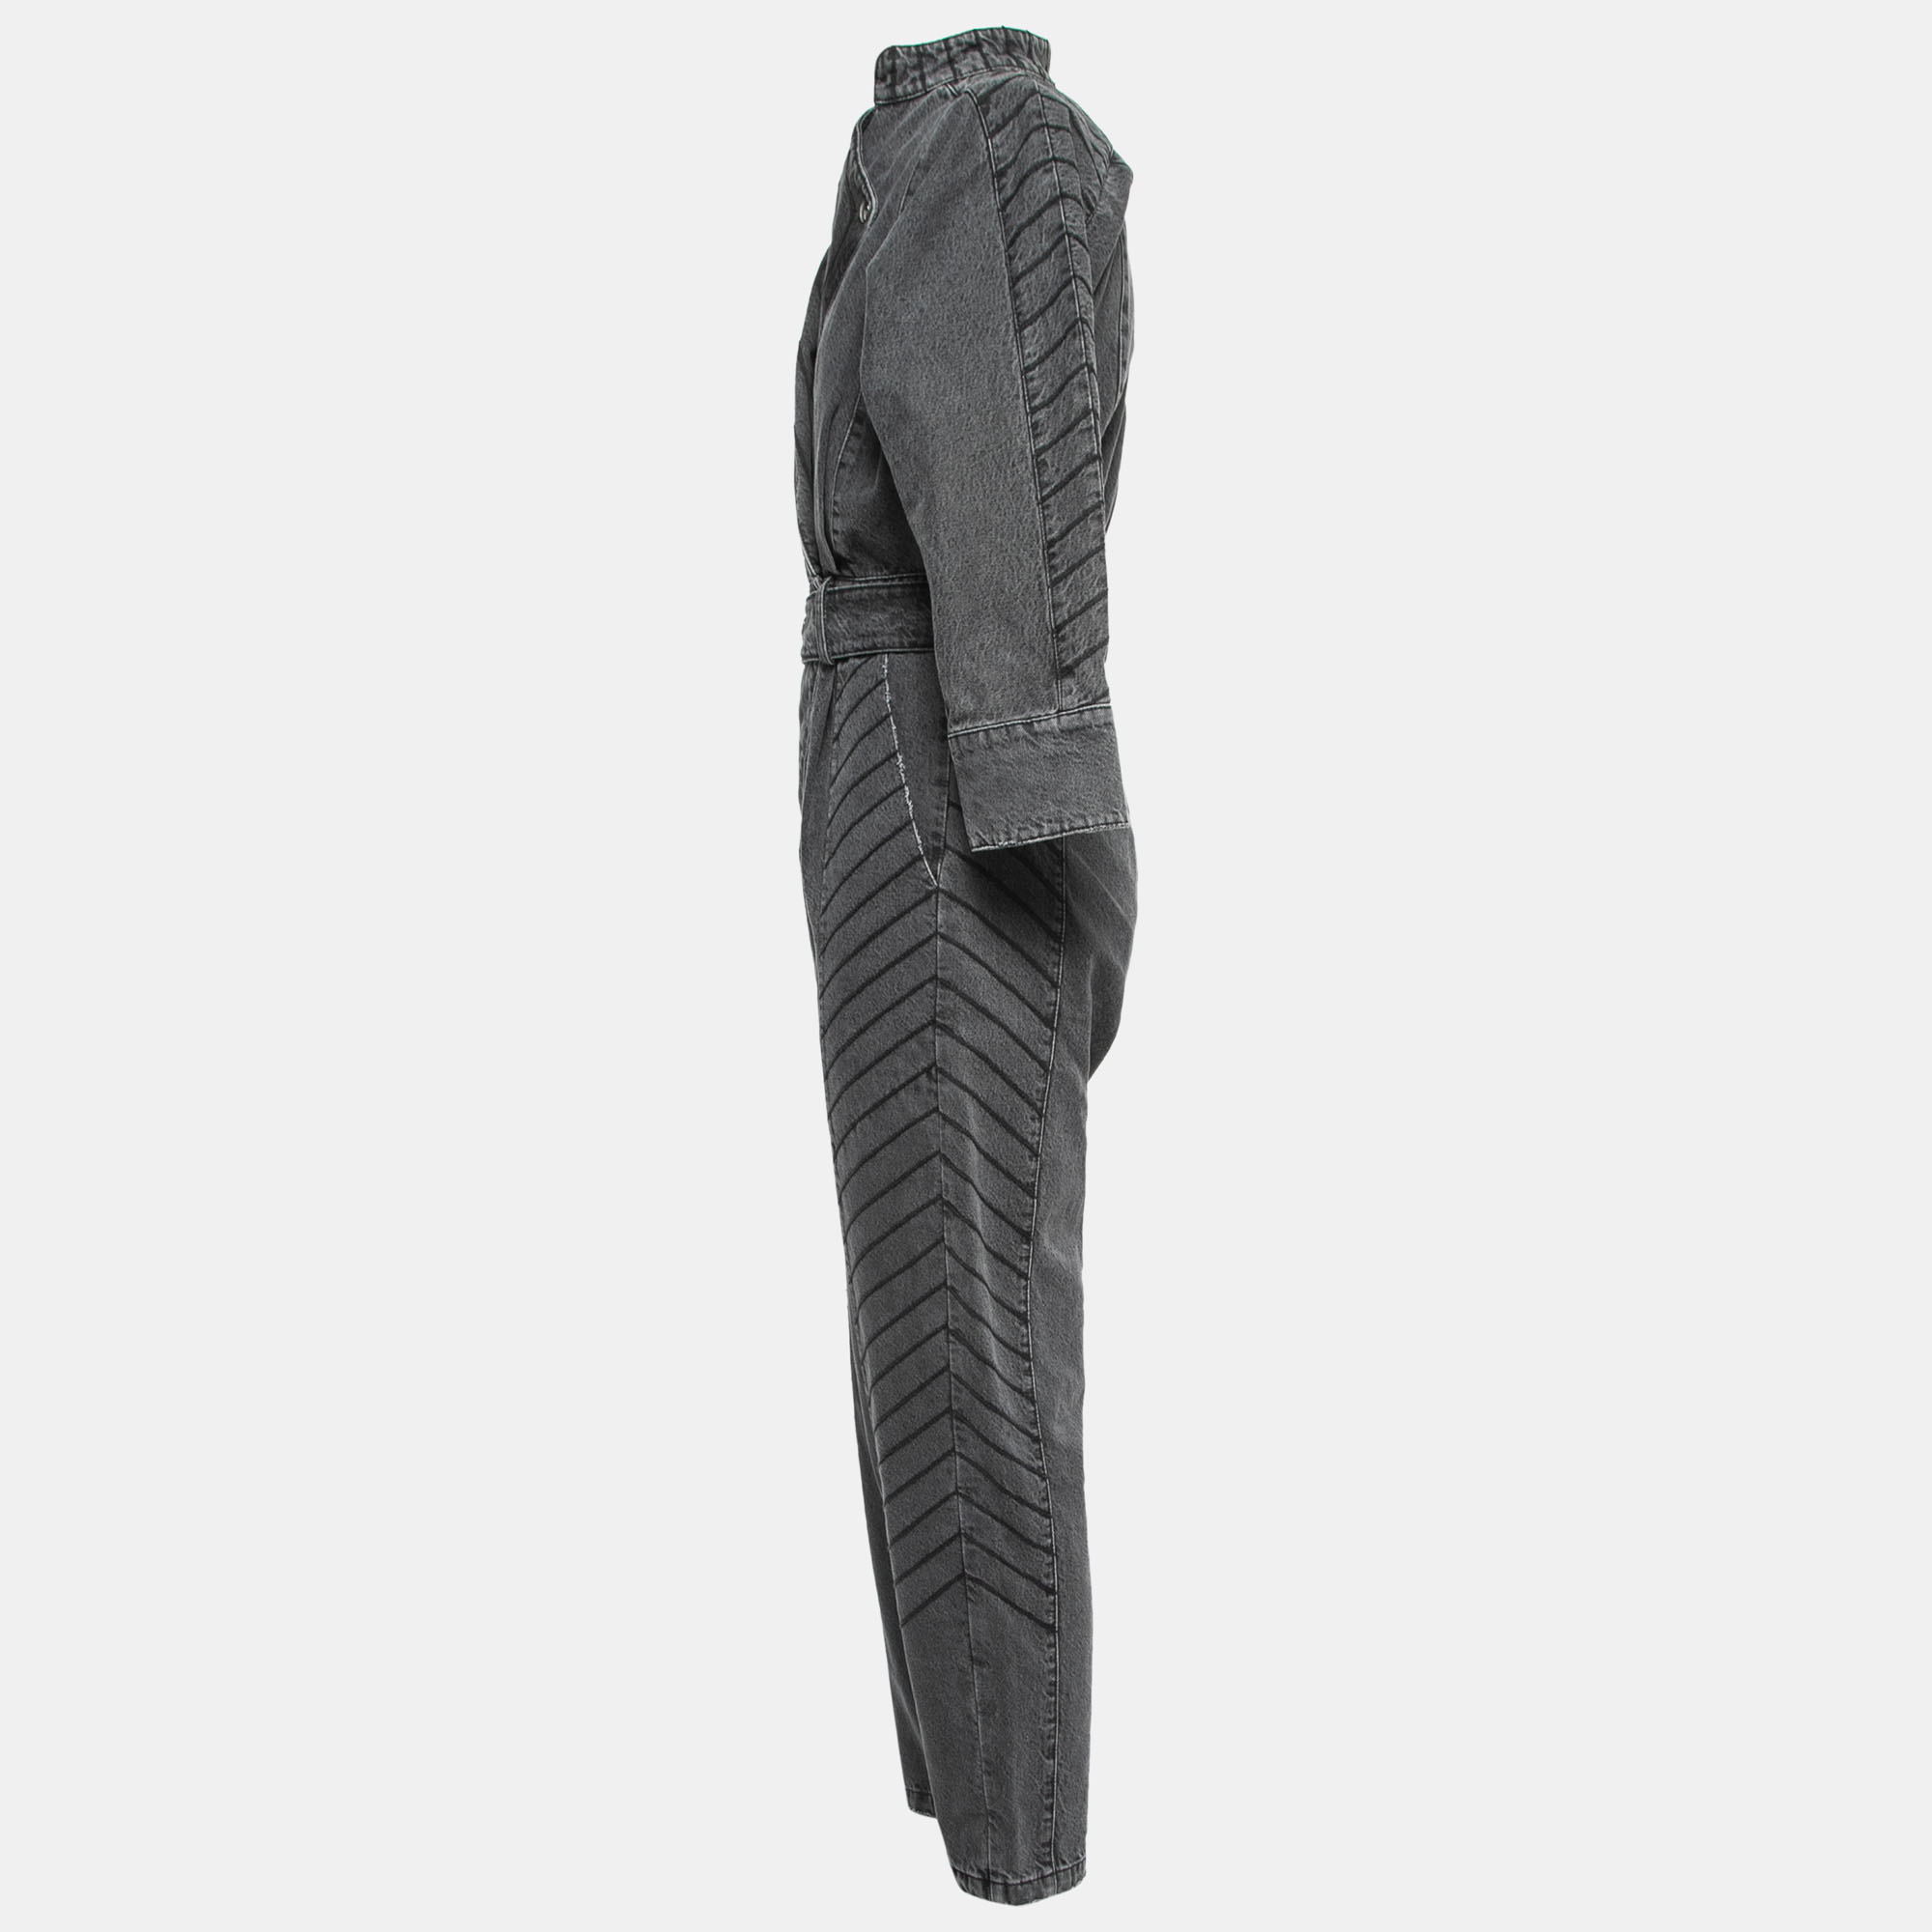 Retrofete Grey Distressed Denim Belted Jumpsuit S